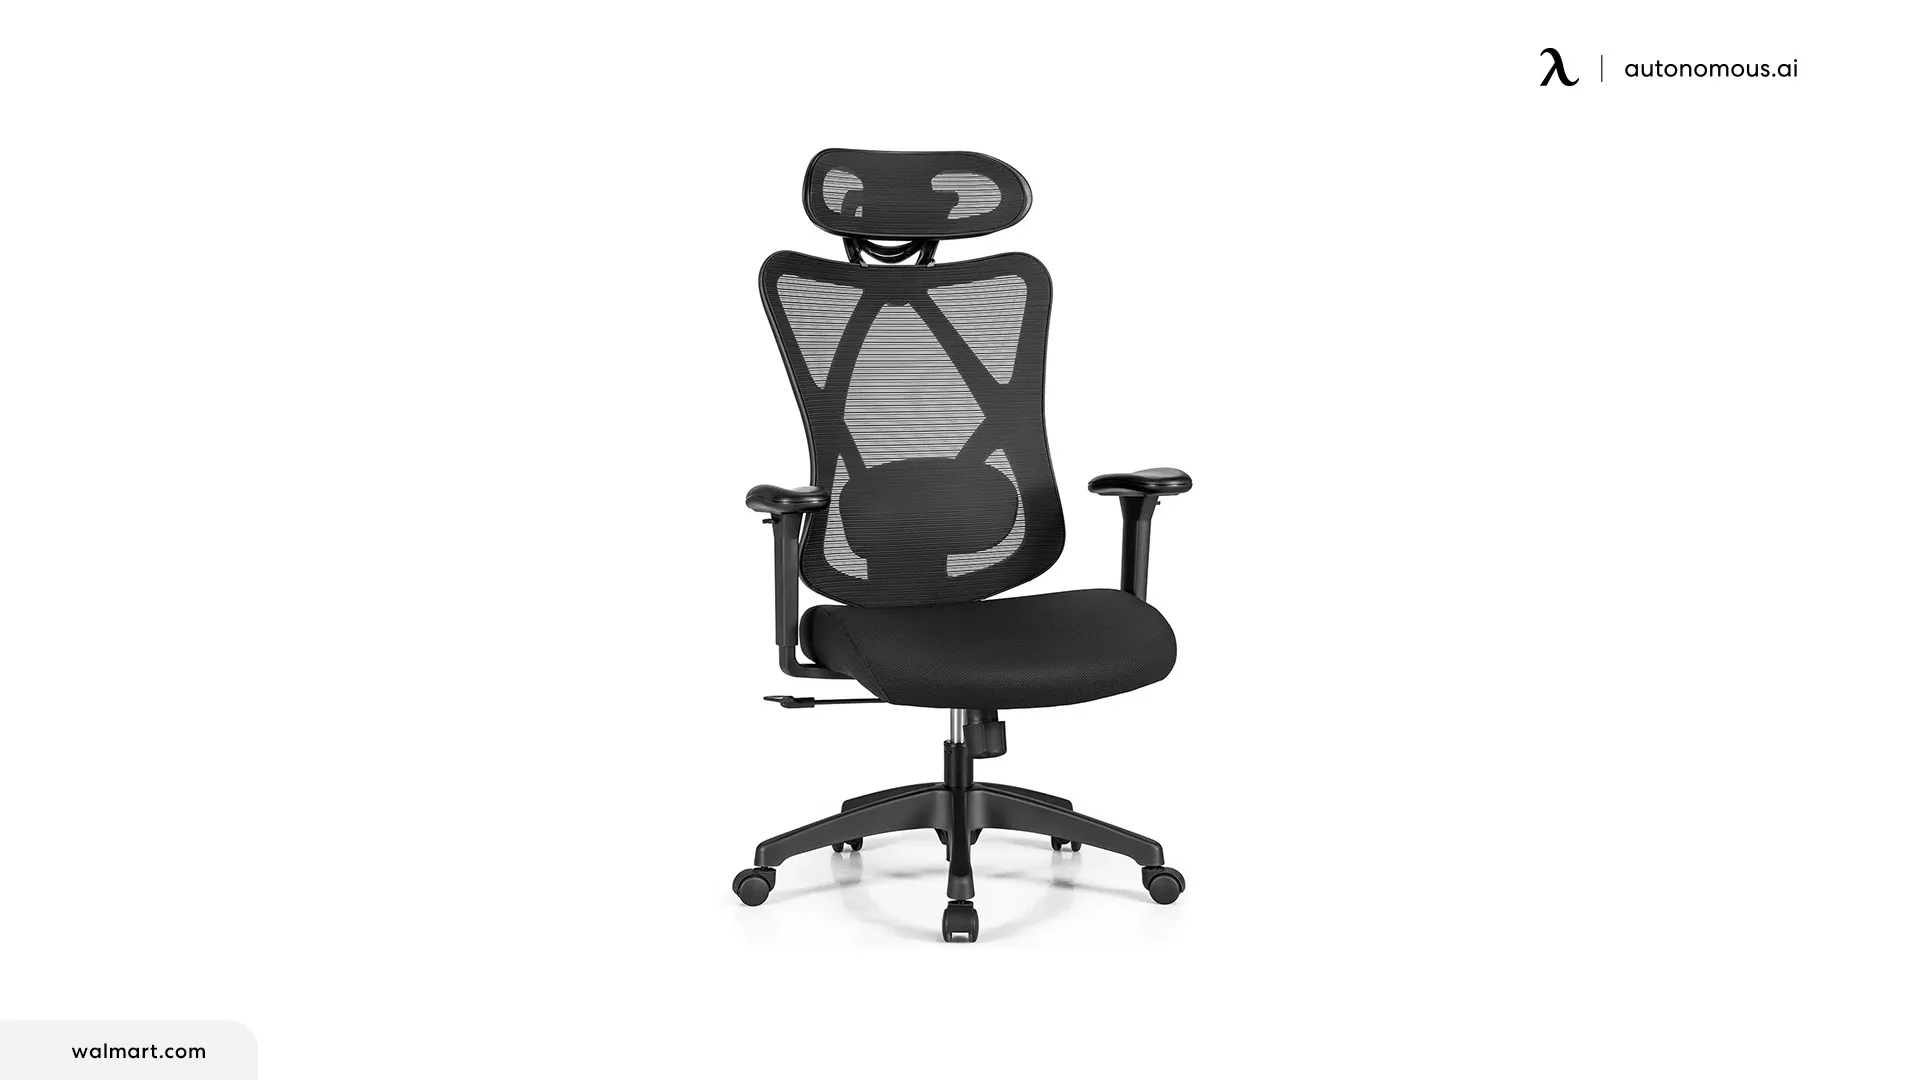 Giantex Ergonomic Mesh Office Chair